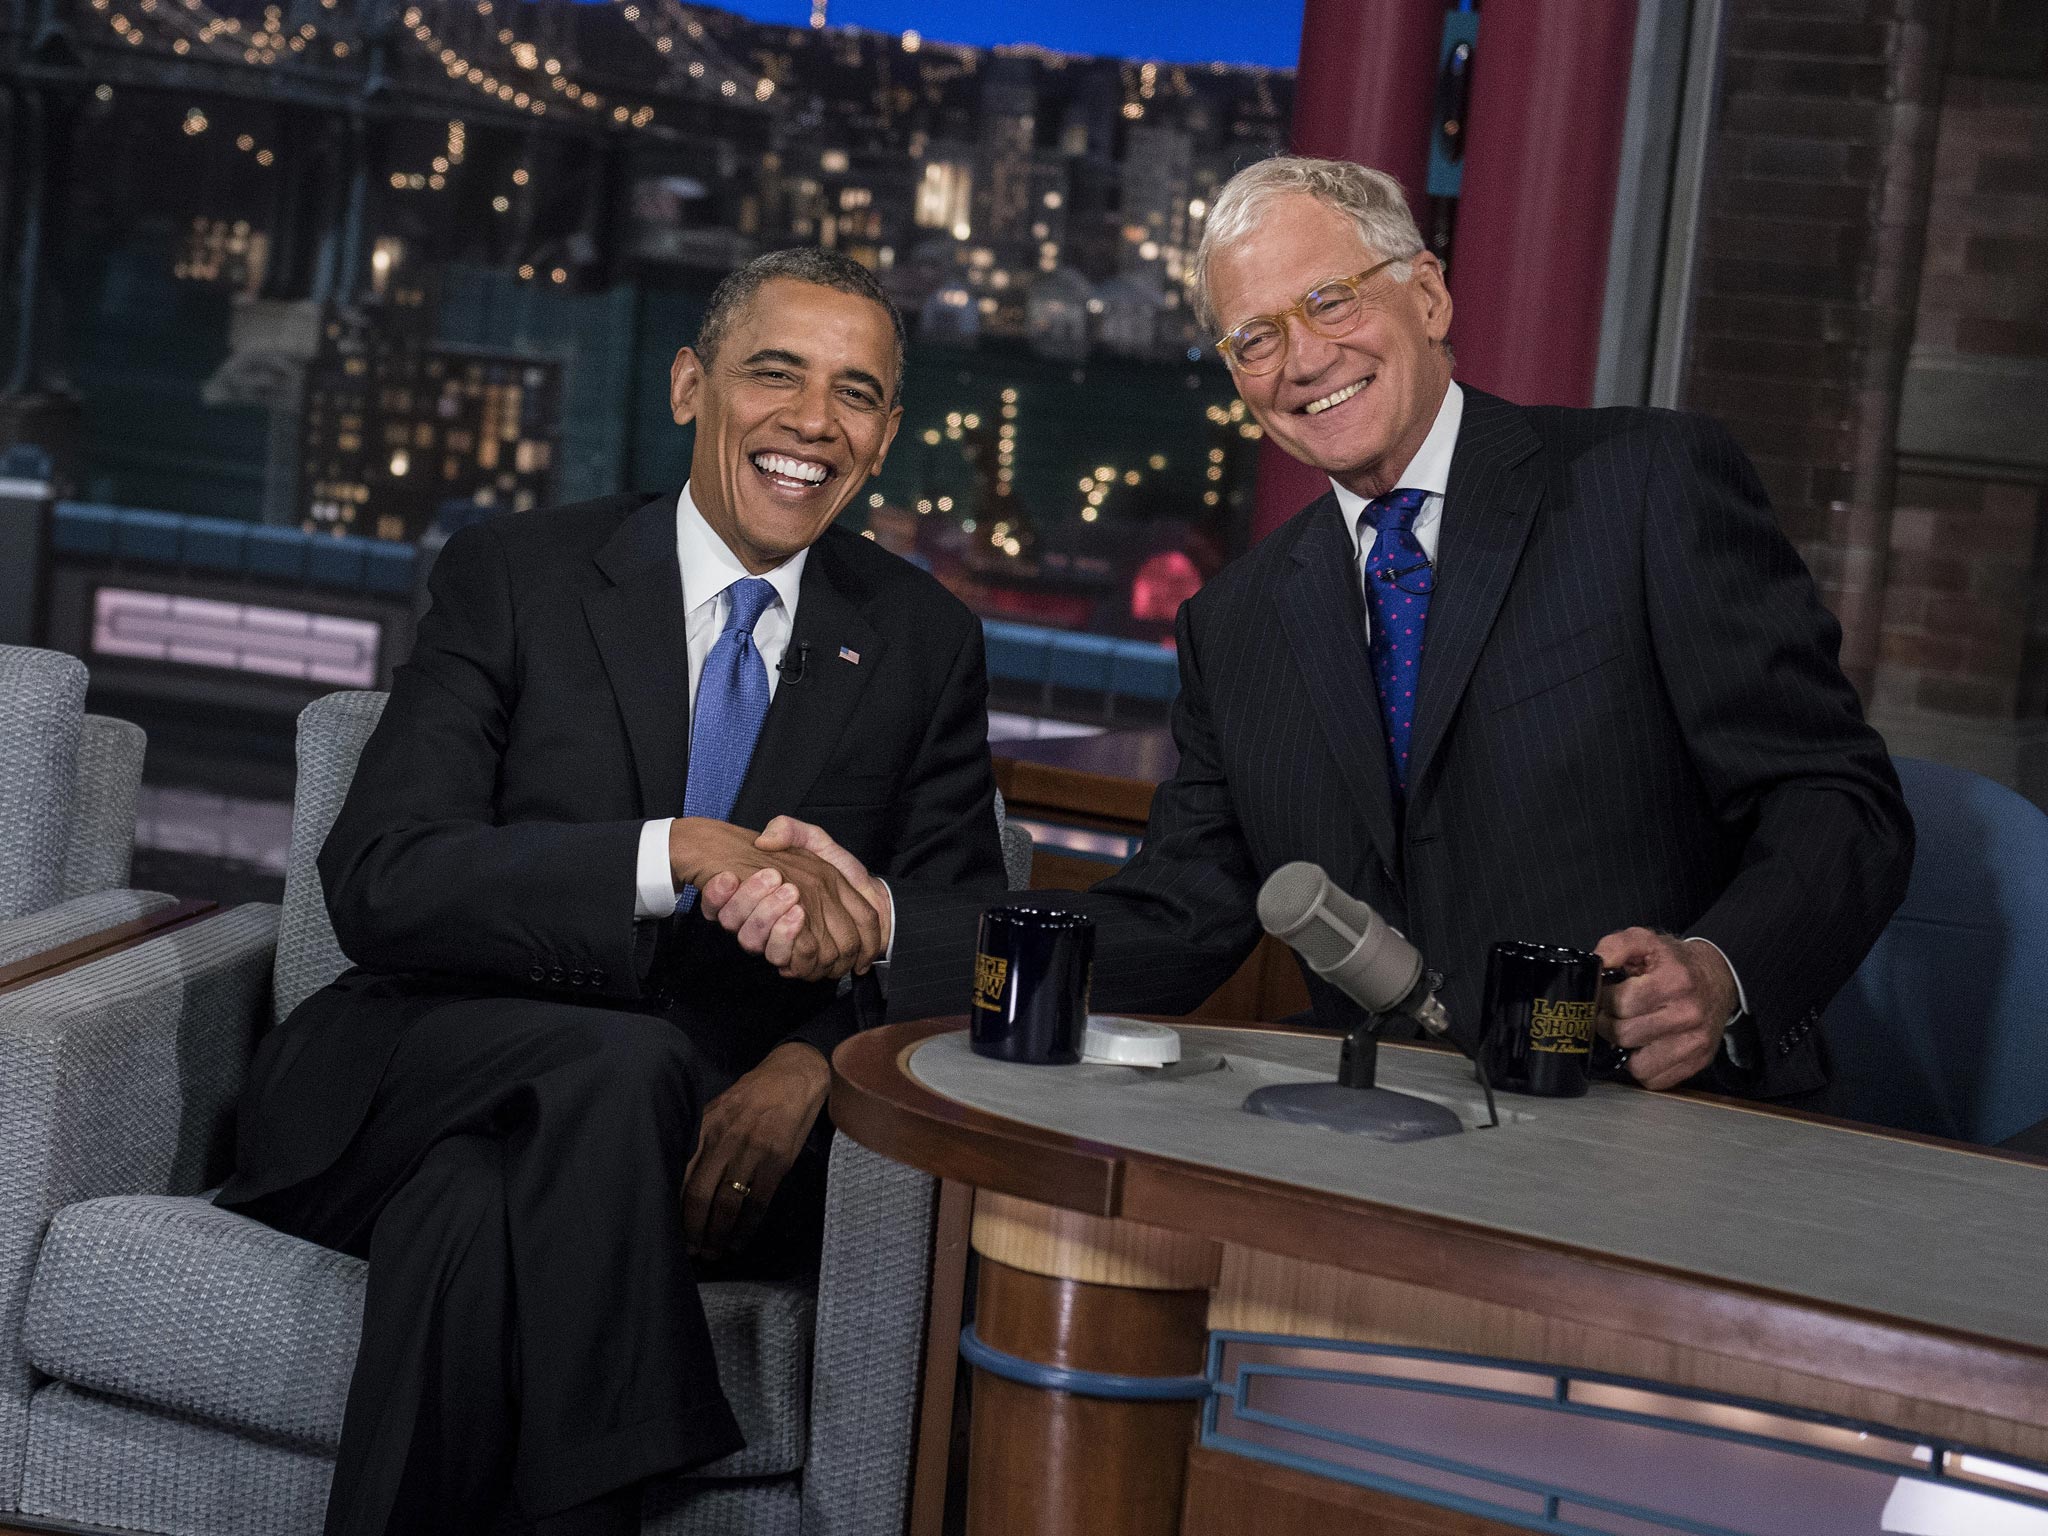 US President Barack Obama and David Letterman speak during a break in the taping